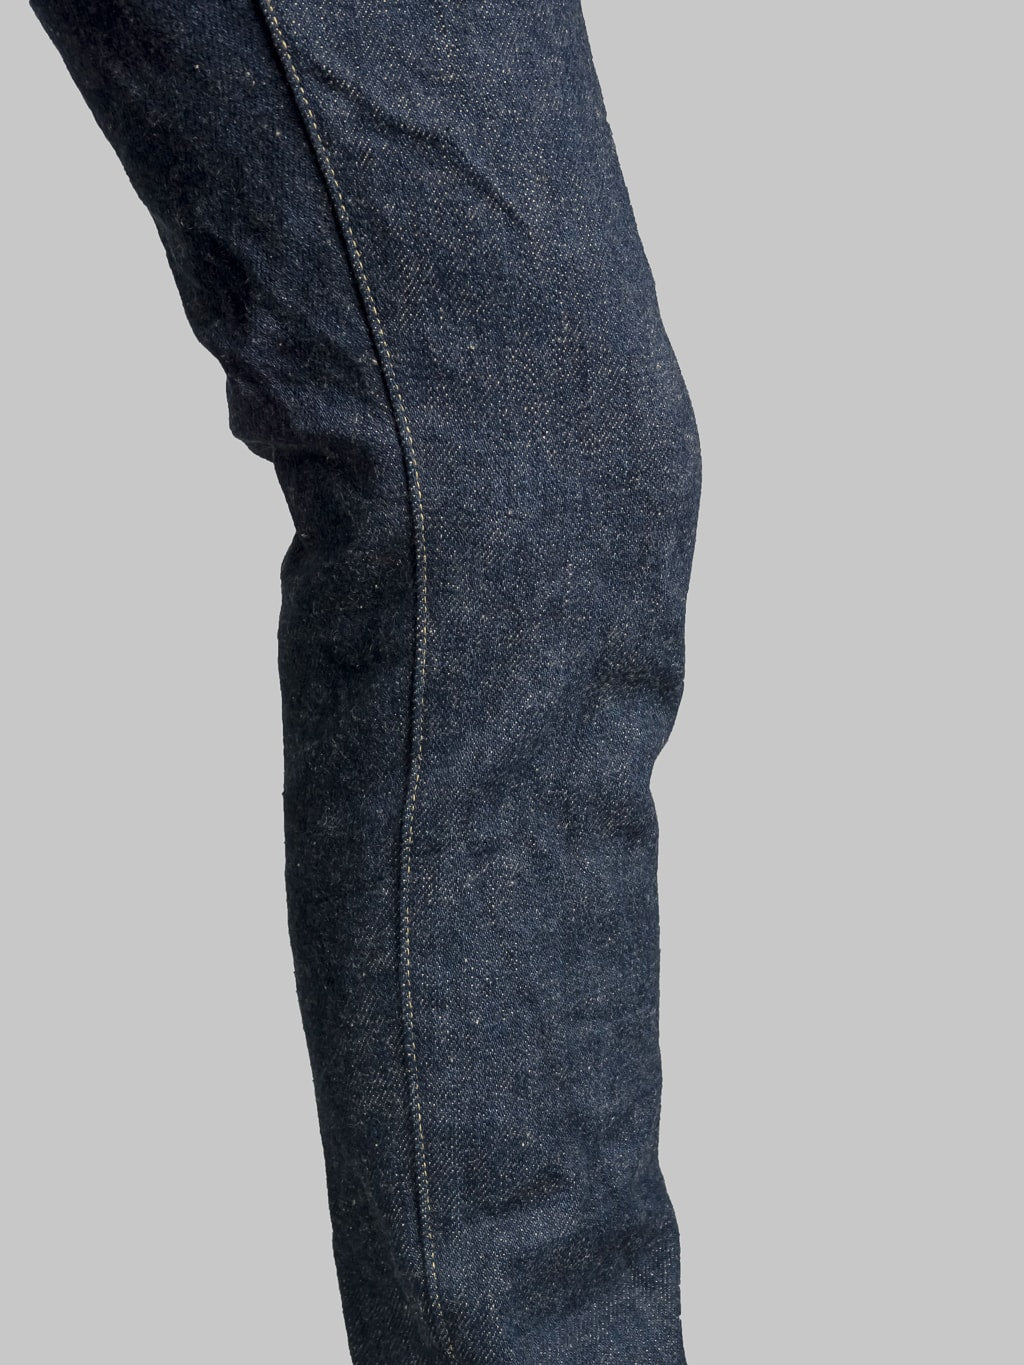 ONI Denim 544ZR Secret Denim Stylish Tapered Jeans inseam